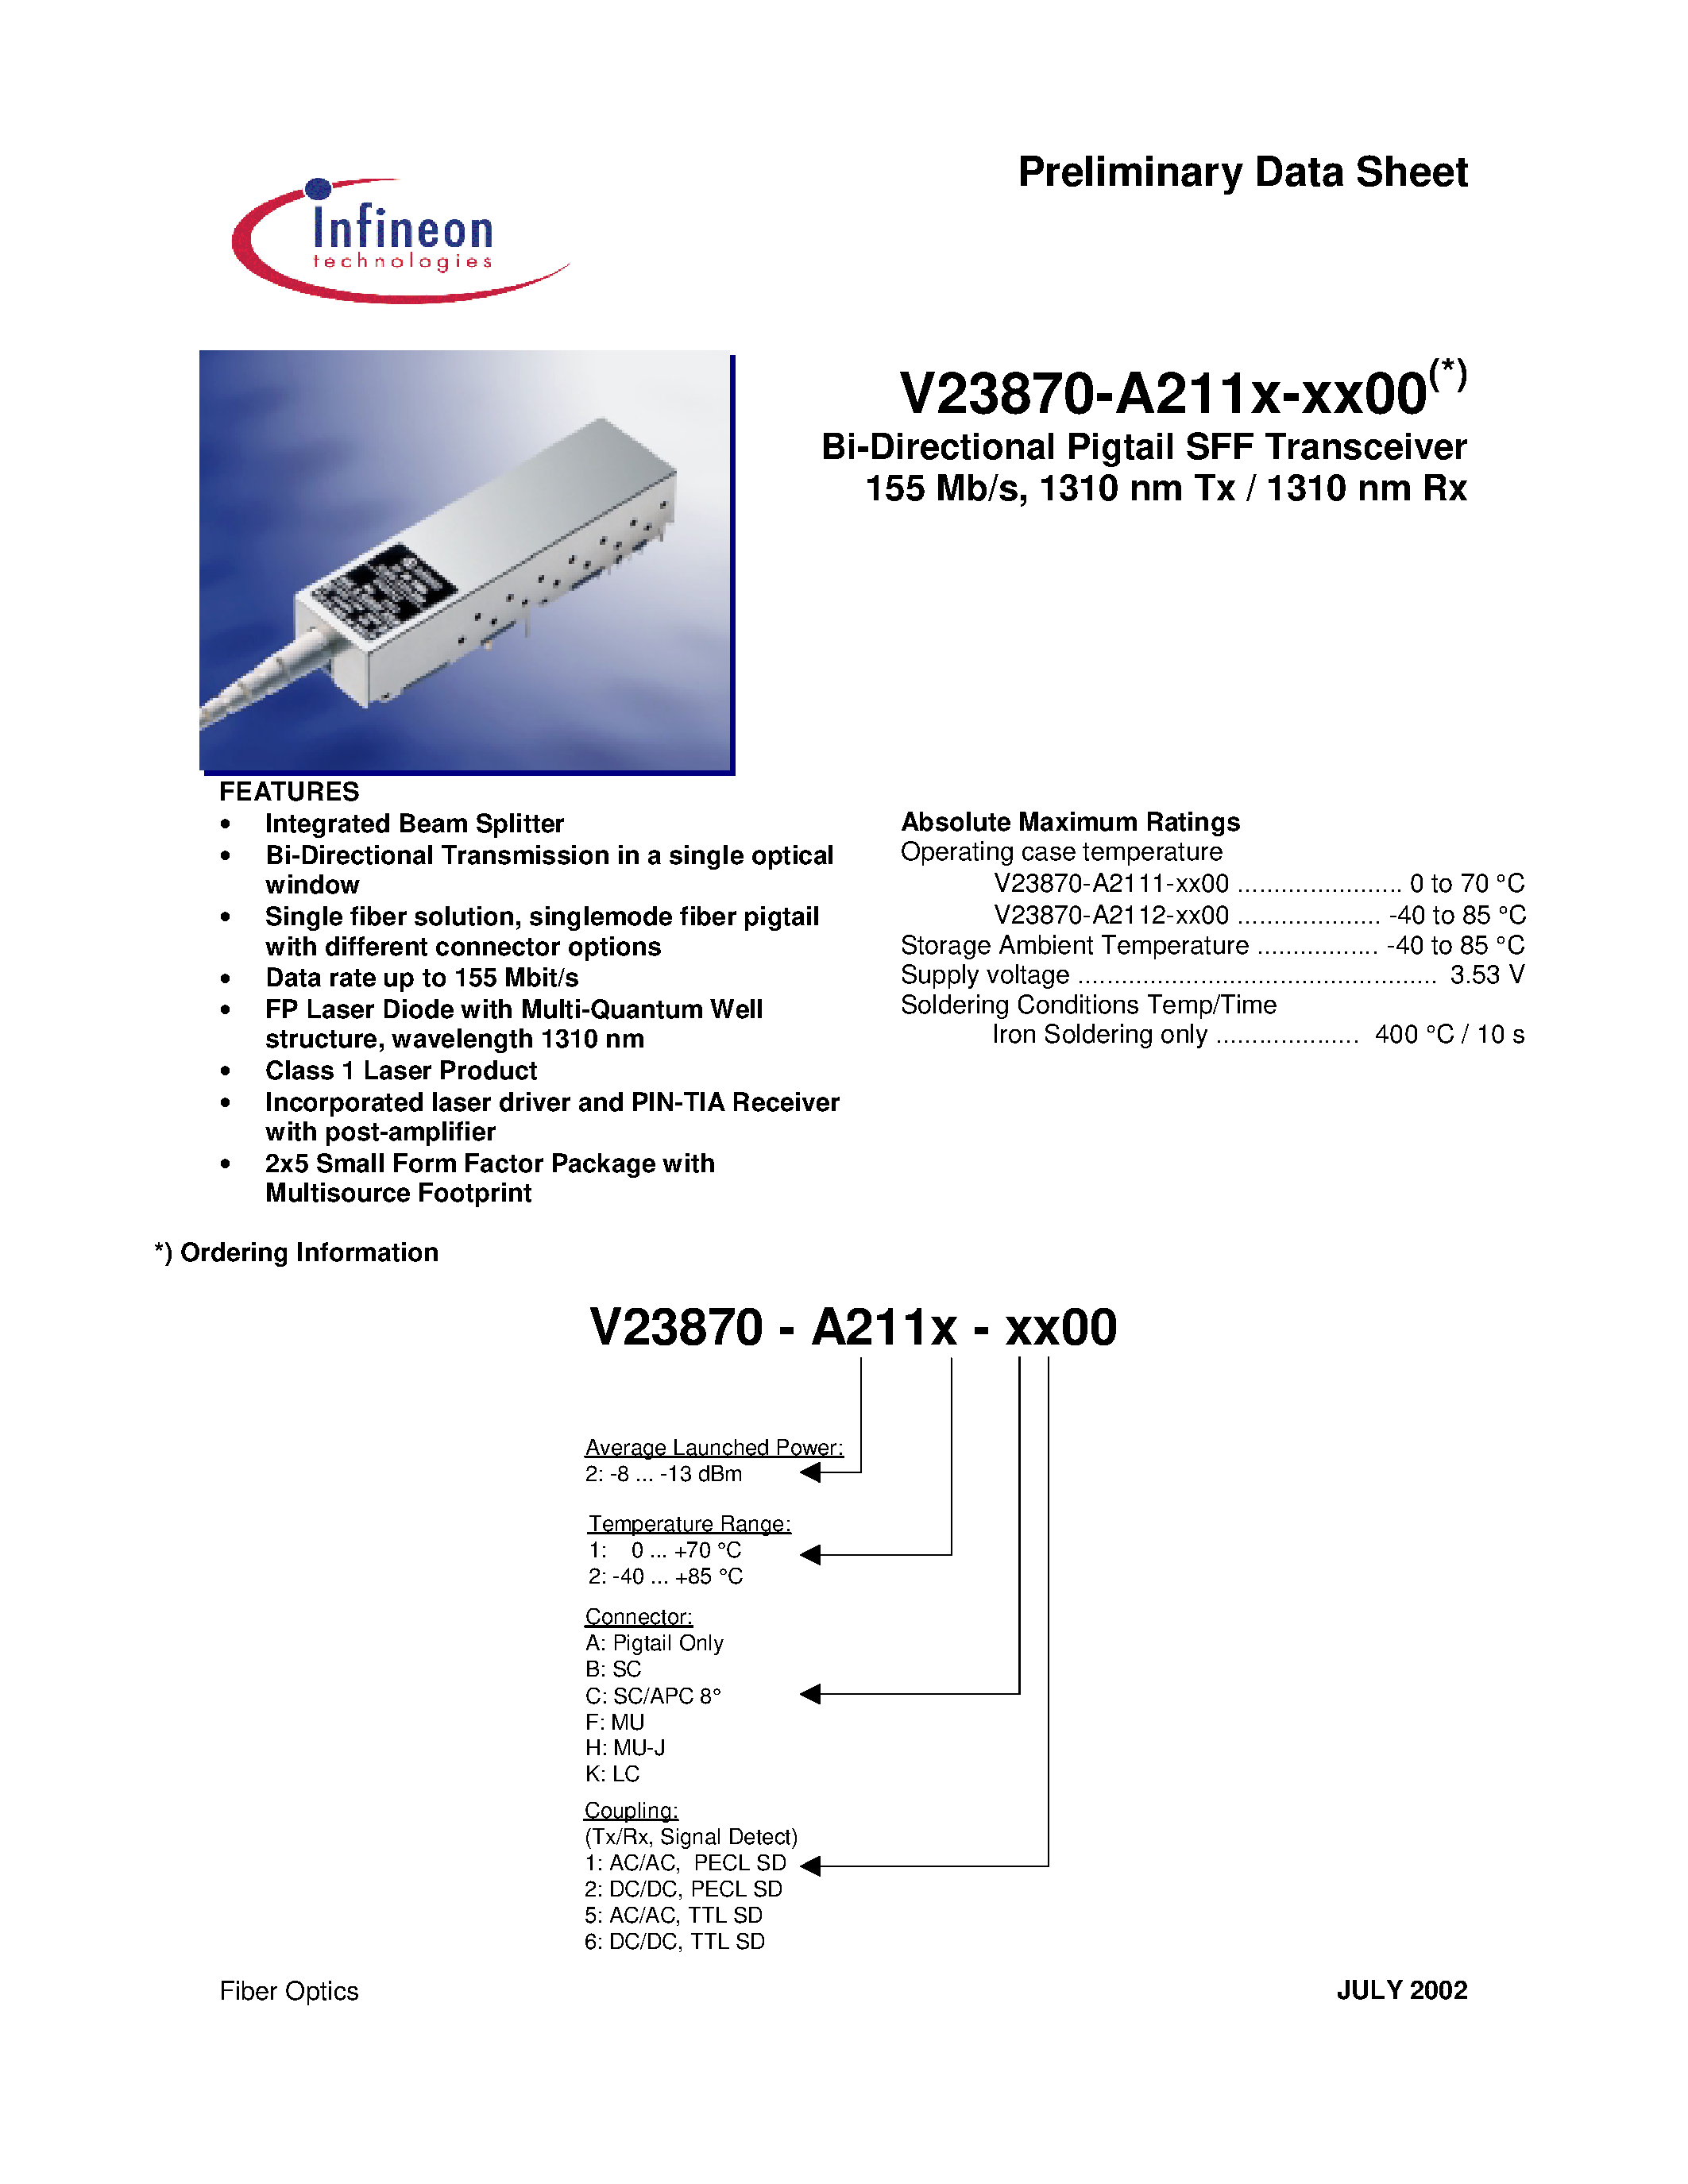 Даташит V23870-A2111-B500 - Bi-Directional Pigtail SFF Transceiver 155 Mb/s/ 1310 nm Tx / 1310 nm Rx страница 1